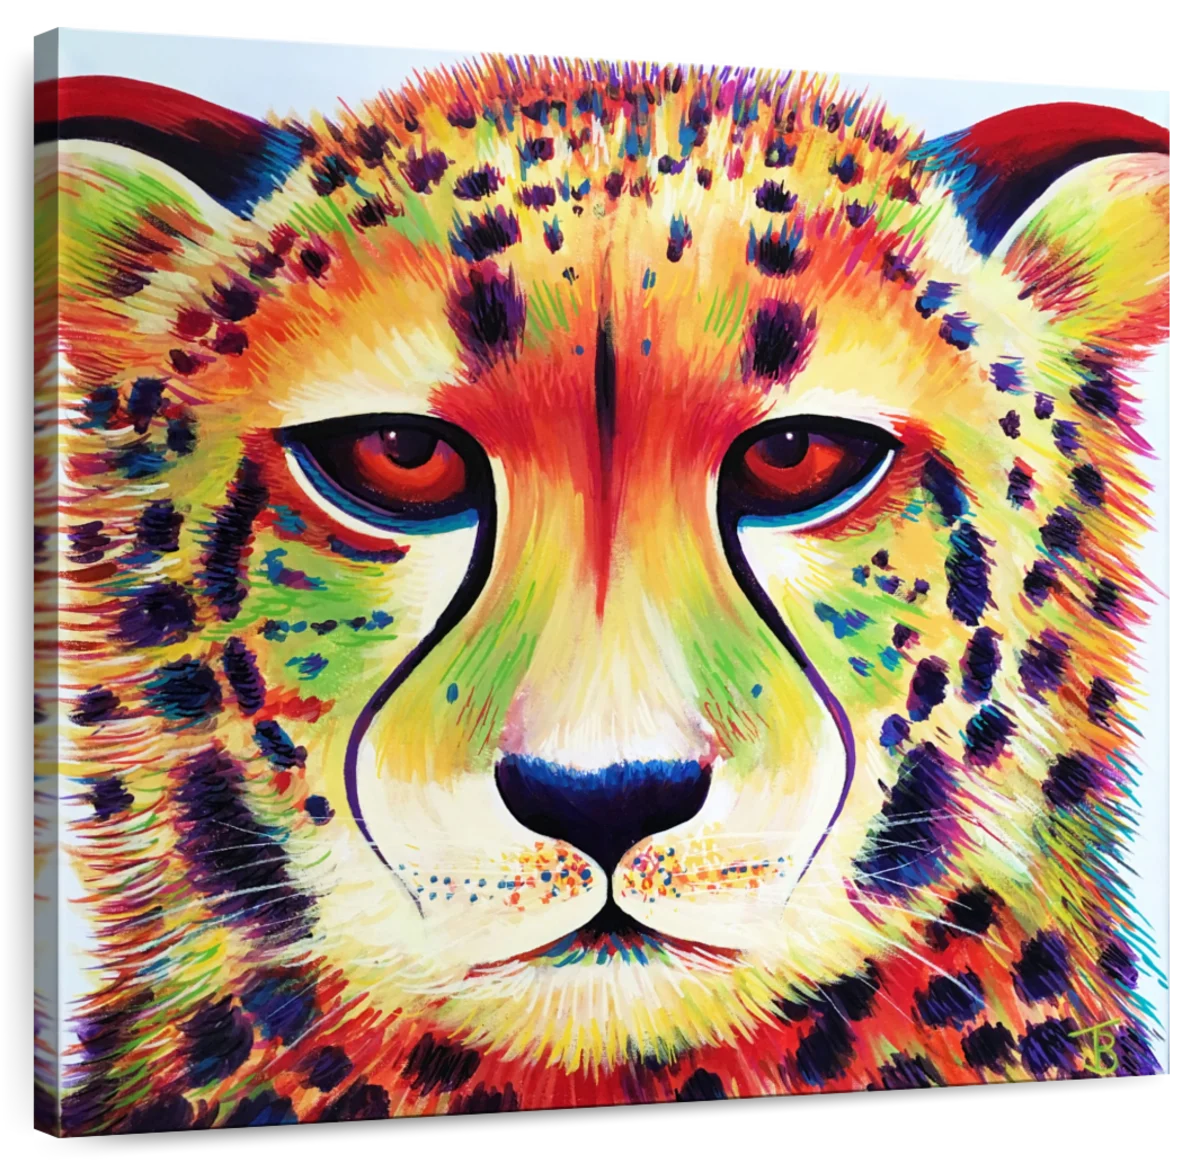 Rainbow Cheetah watercolor